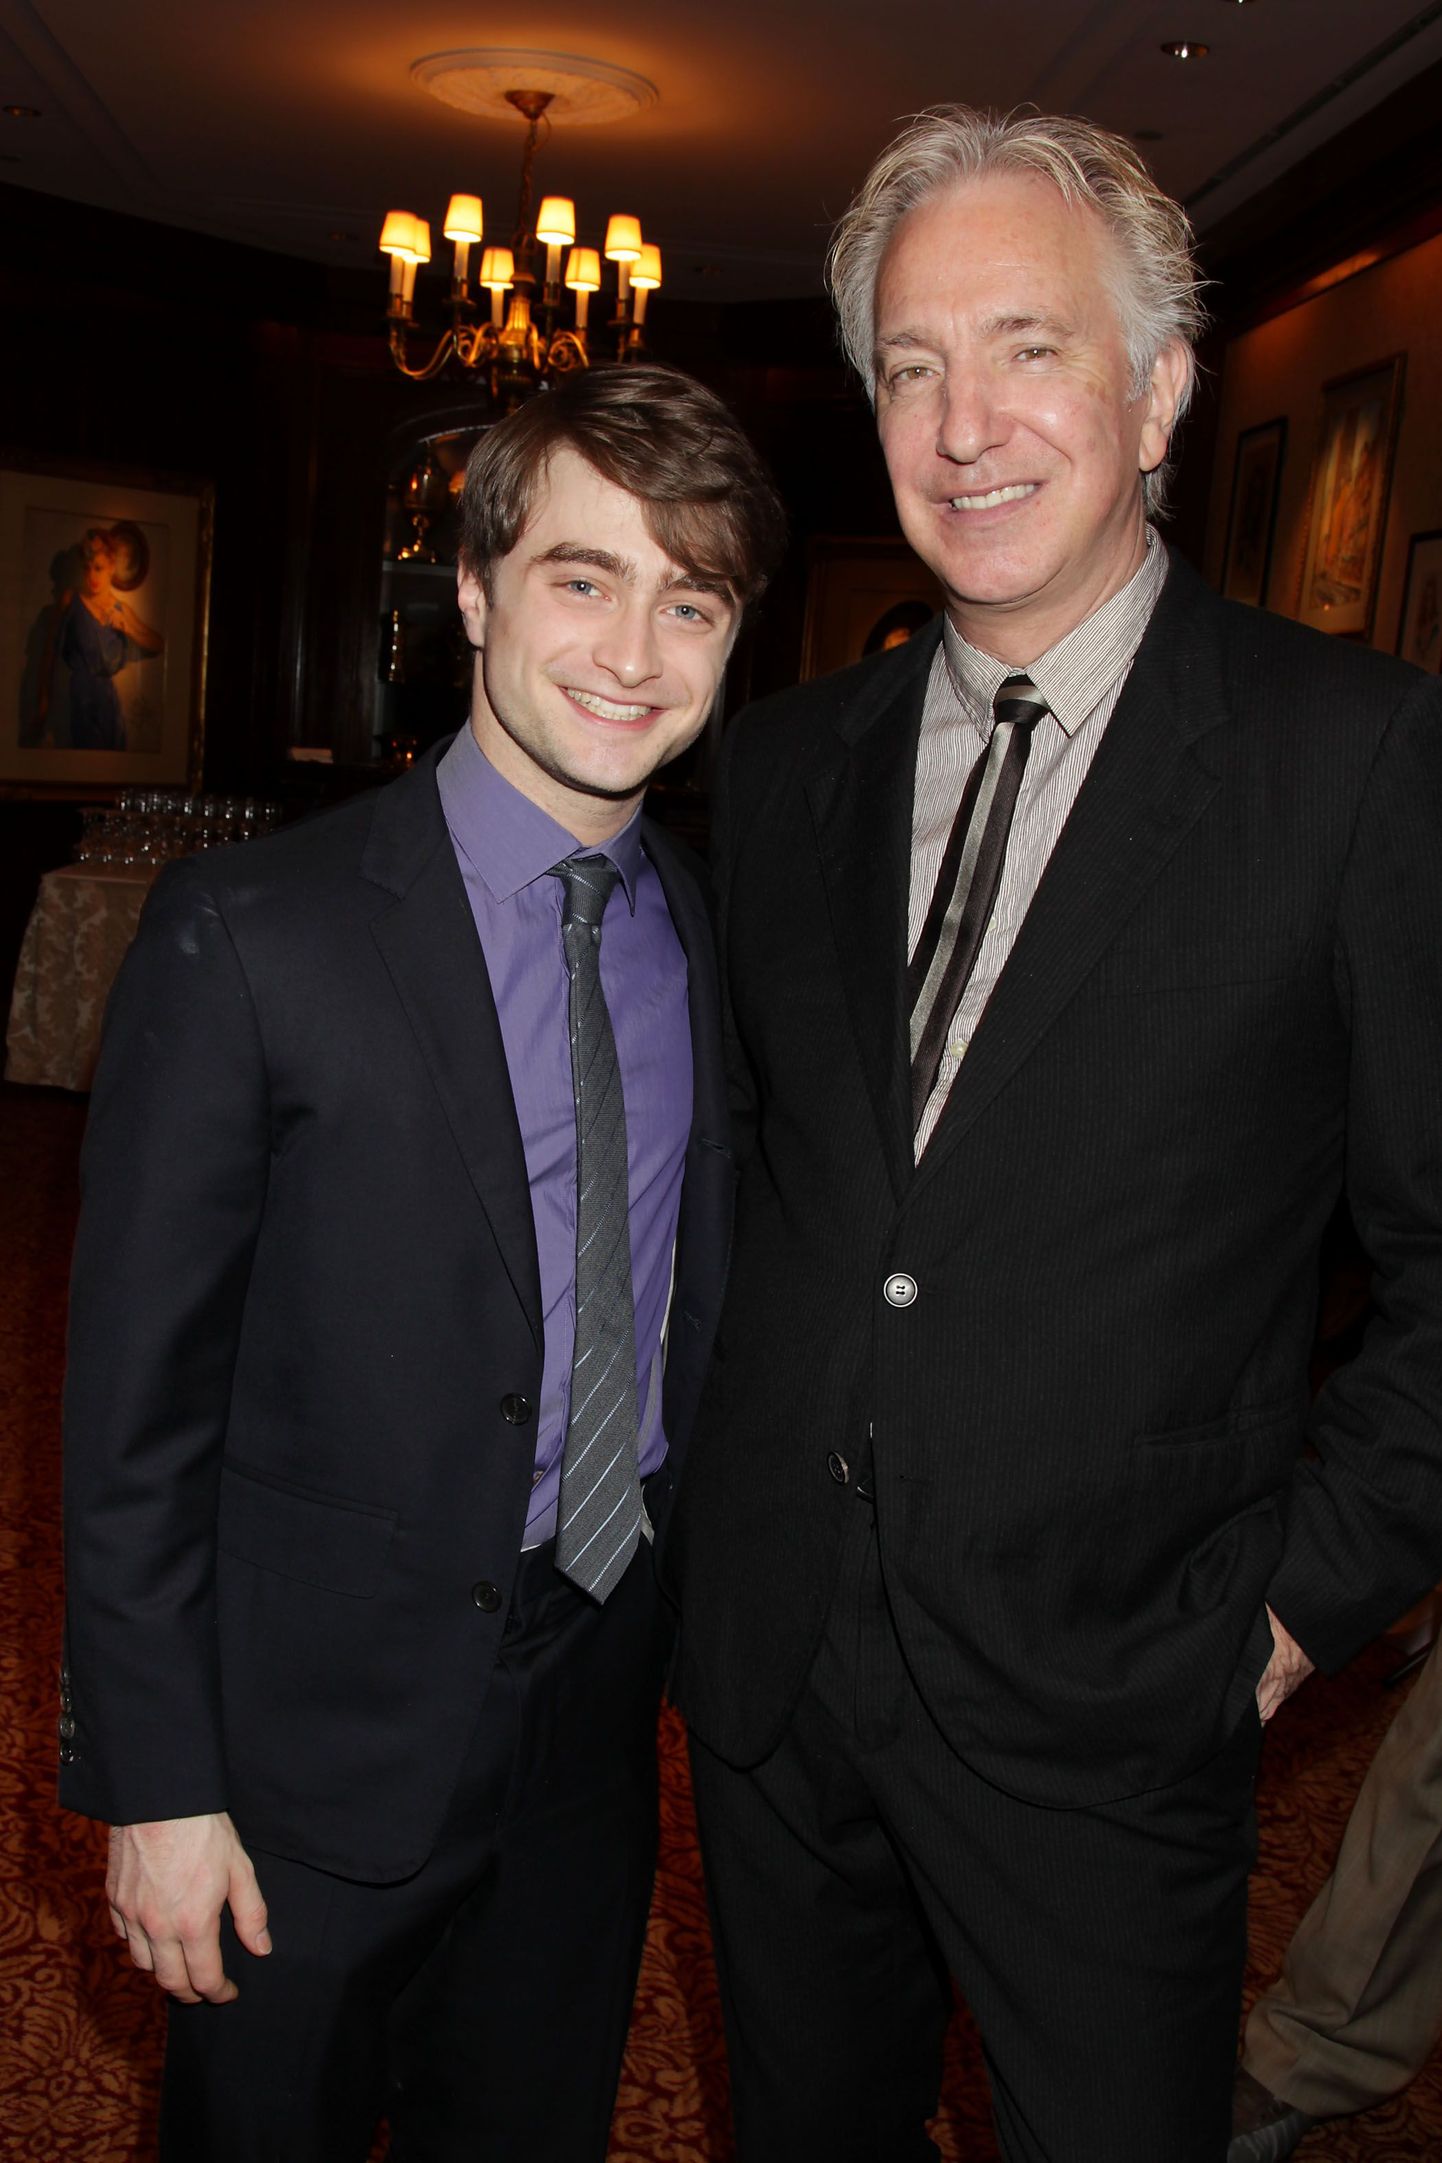 Daniel Radcliffe ja Alan Rickman 2011. aasta novembris